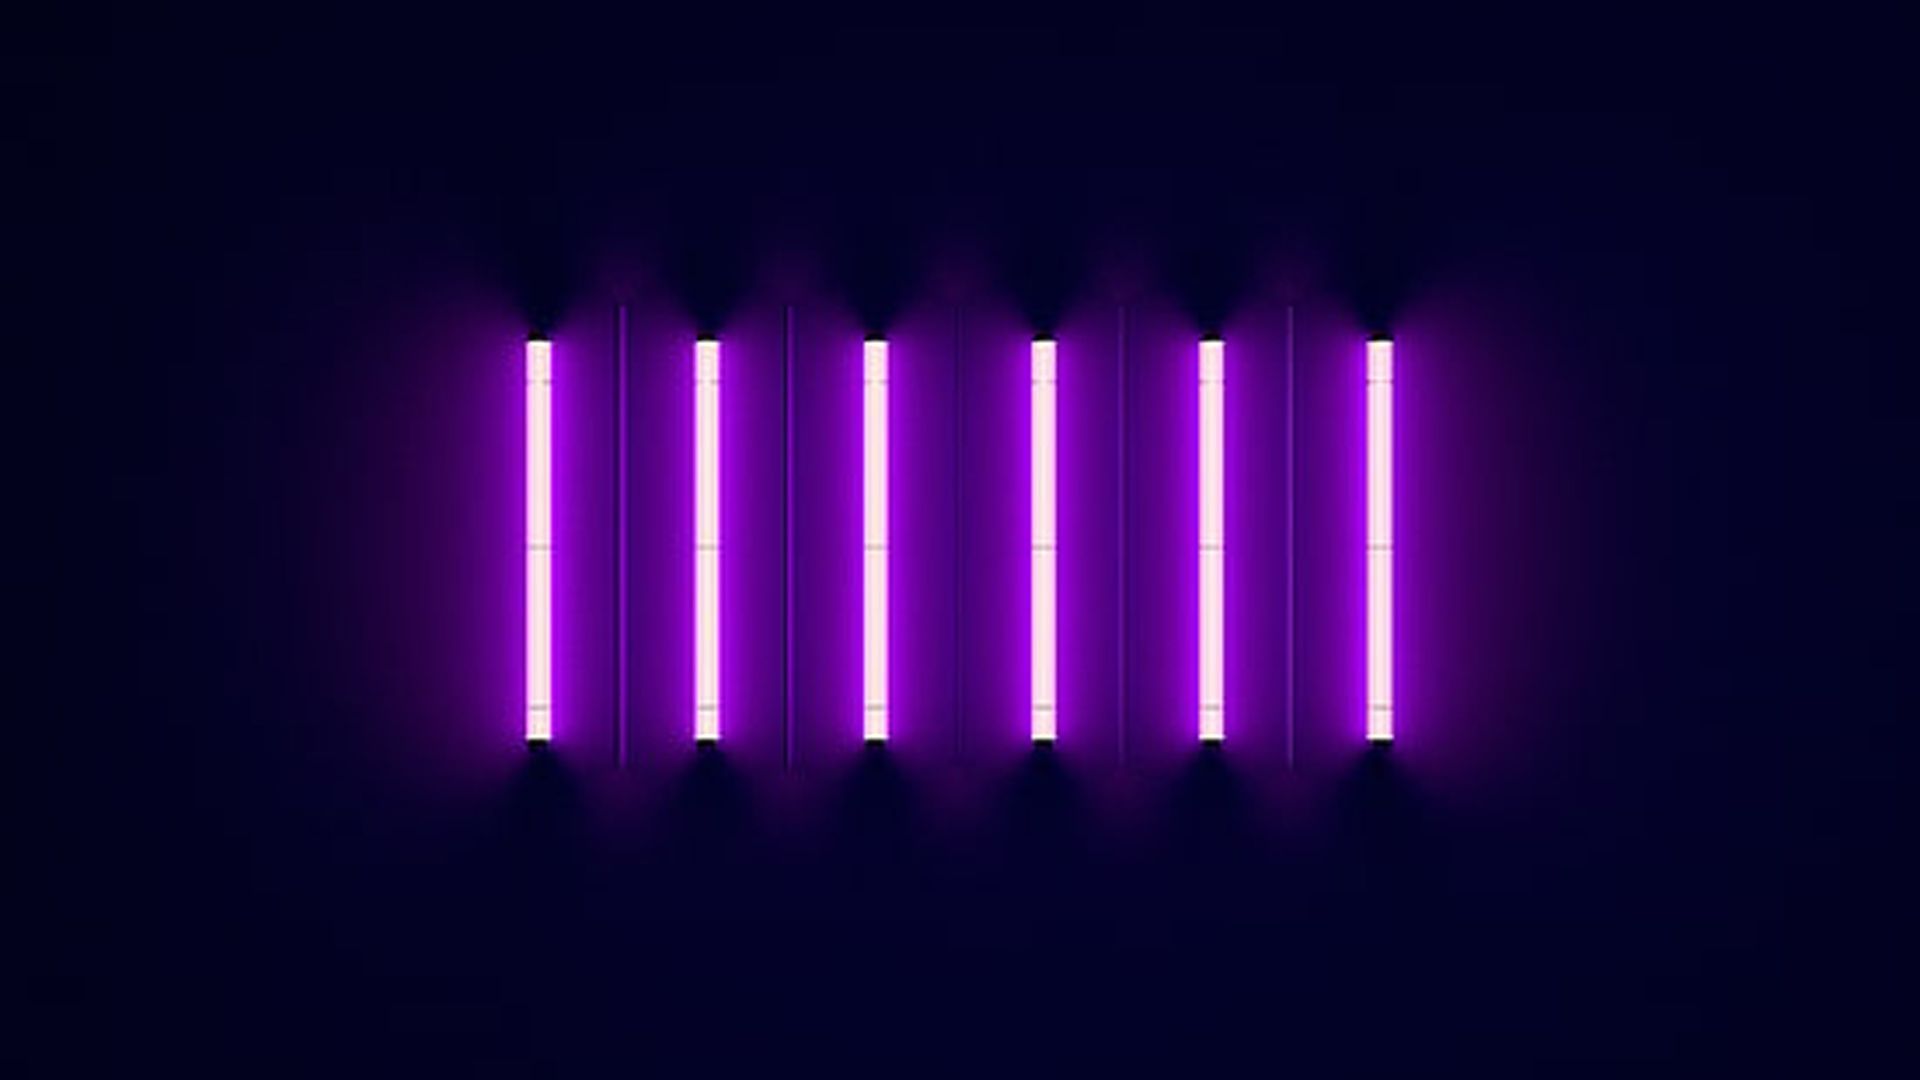 A purple neon light wallpaper with a dark background - Purple, neon, neon purple